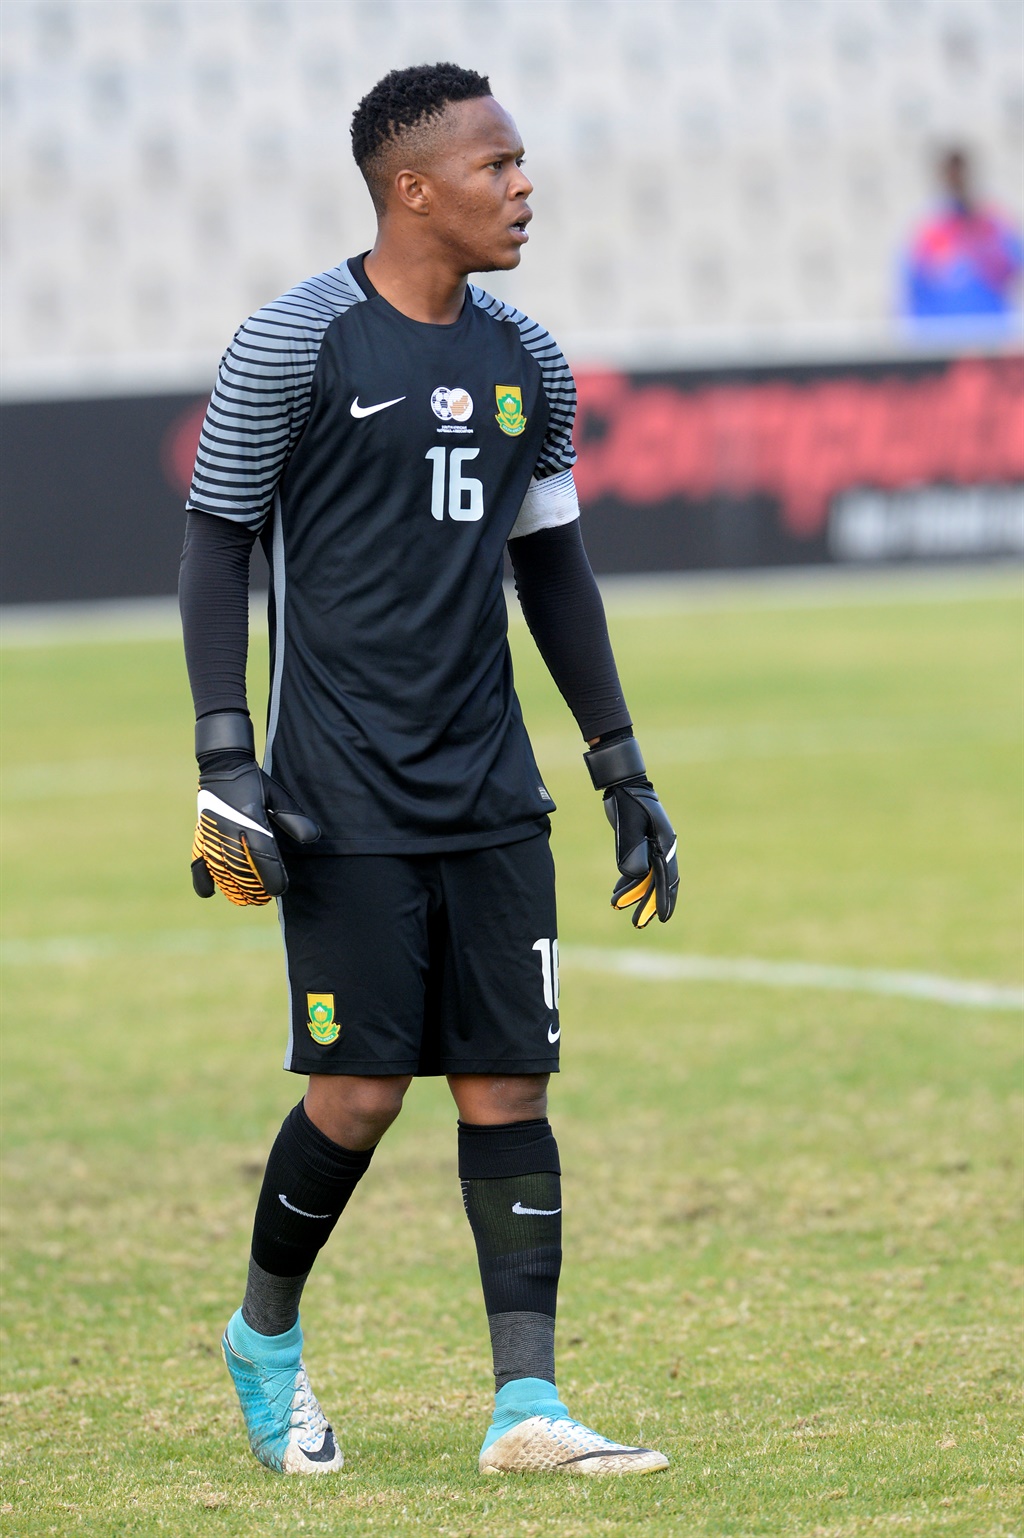 Amajita goalkeepr Khulekani Kubheka kept his team in the game with crucial saves against Nigeria.
Photo: Gallo Images 